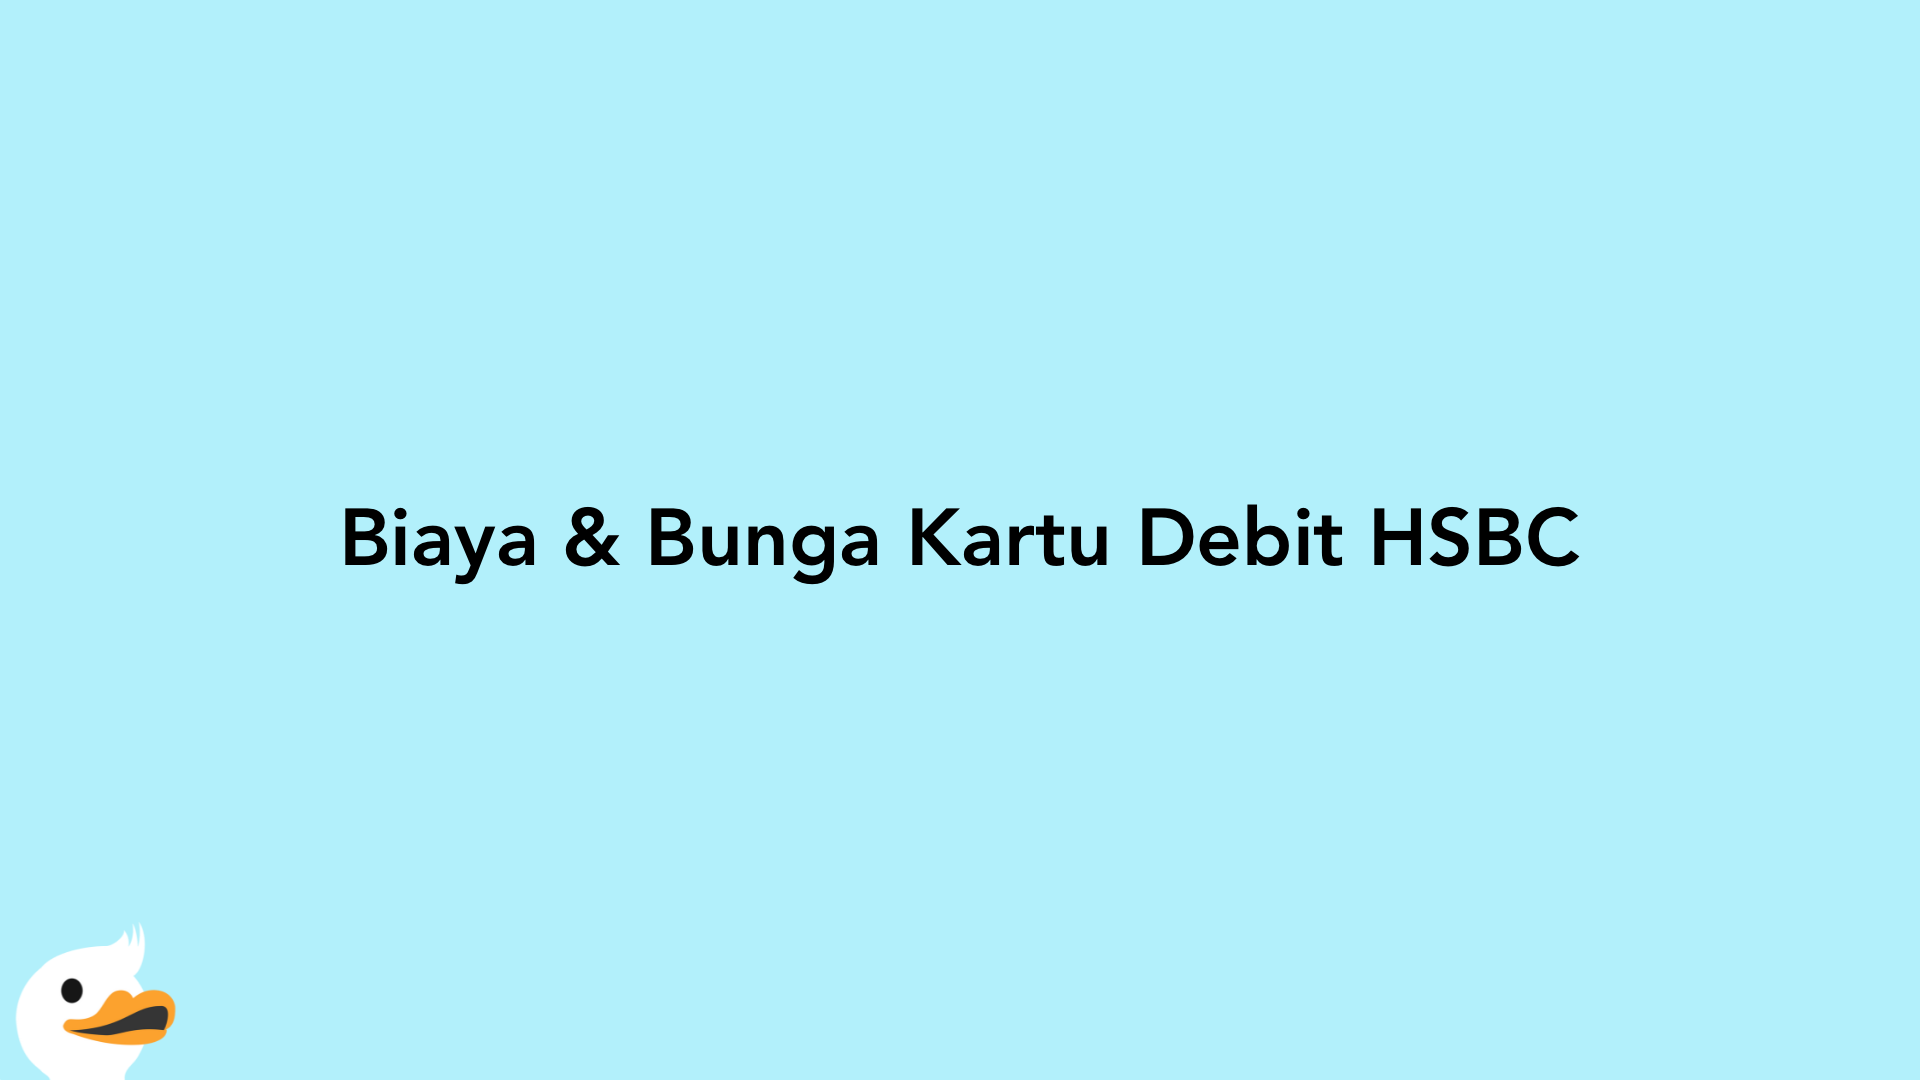 Biaya & Bunga Kartu Debit HSBC